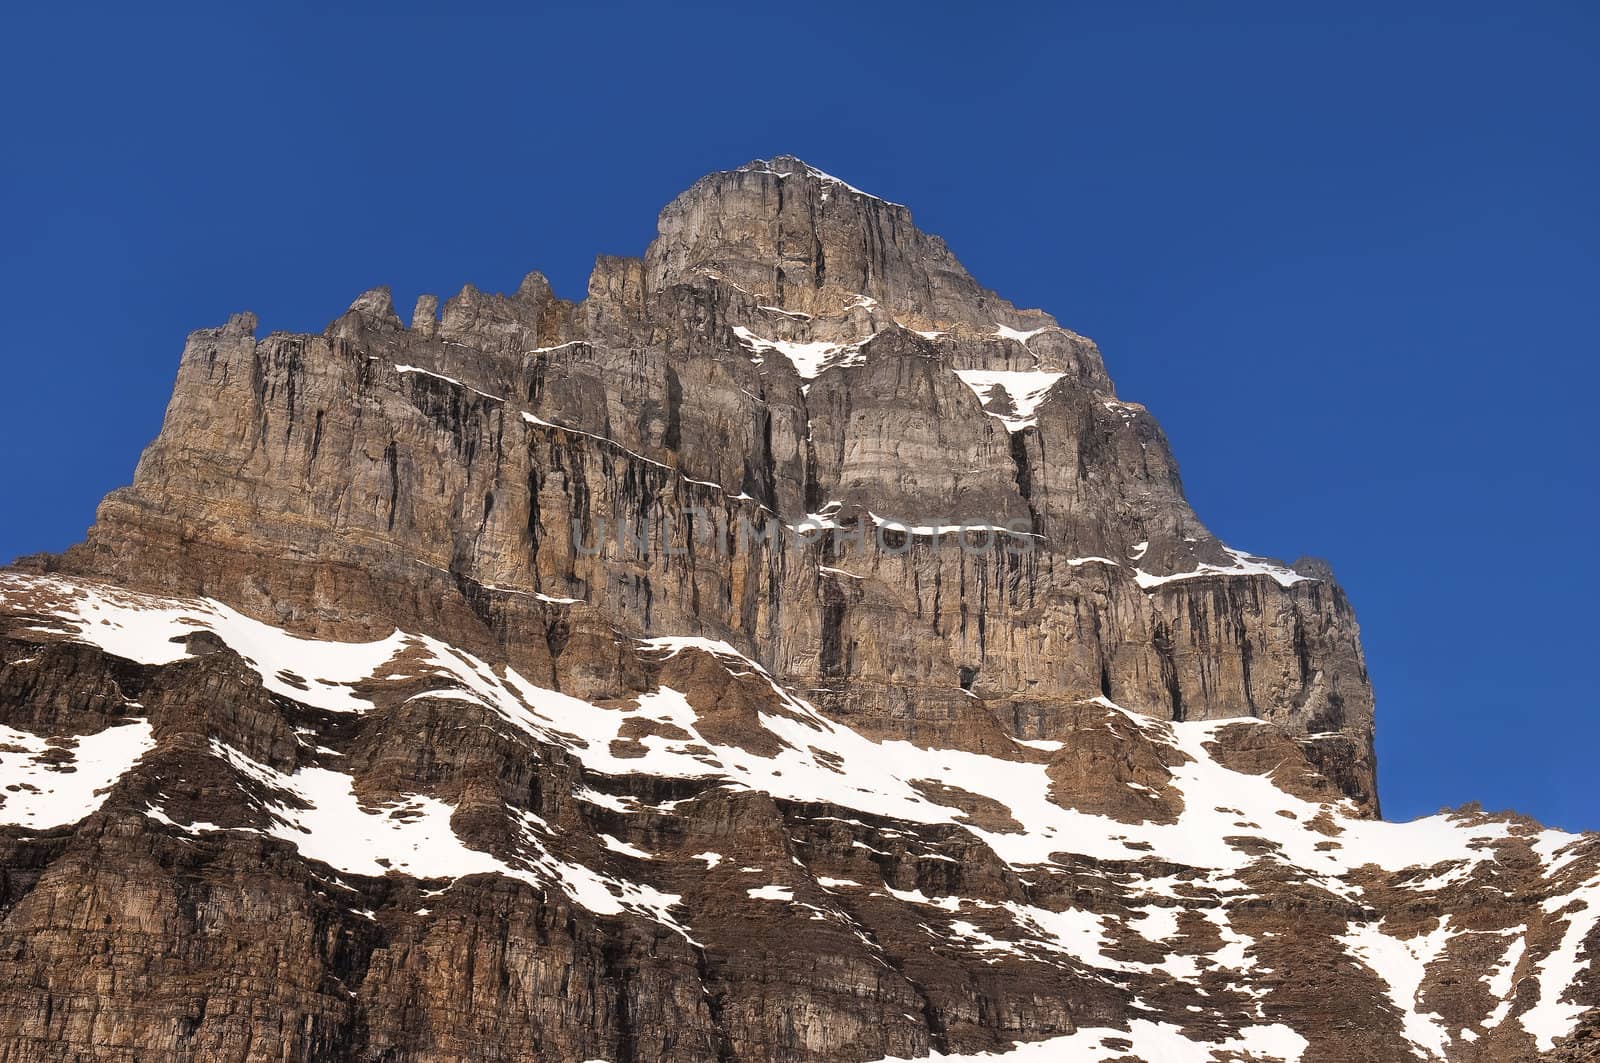 Canadian mountain by irisphoto4